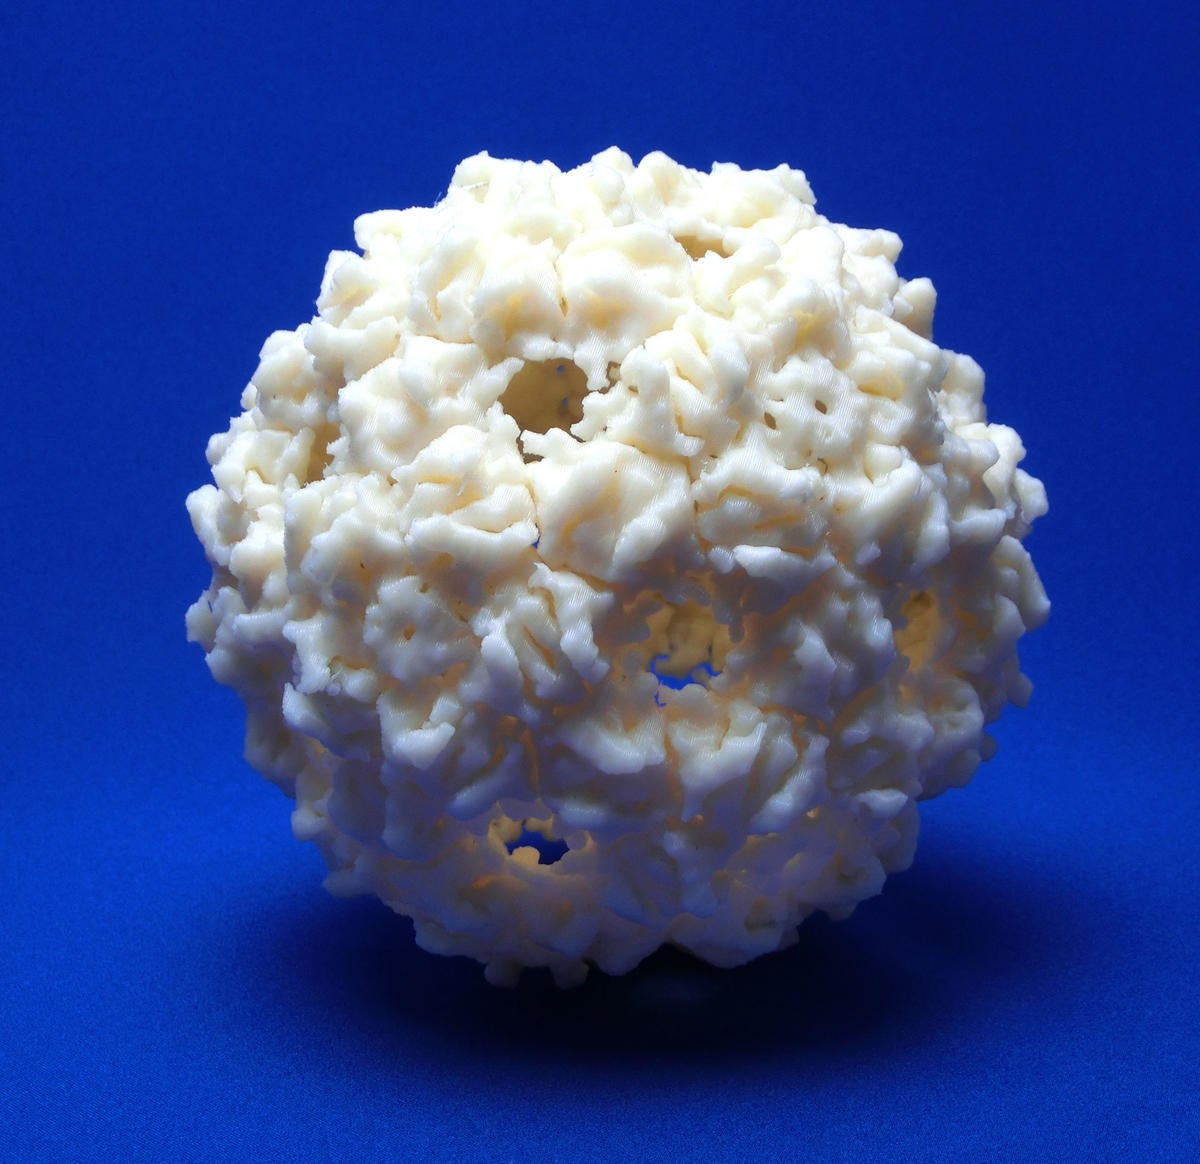 Image of a 3D printed virus 